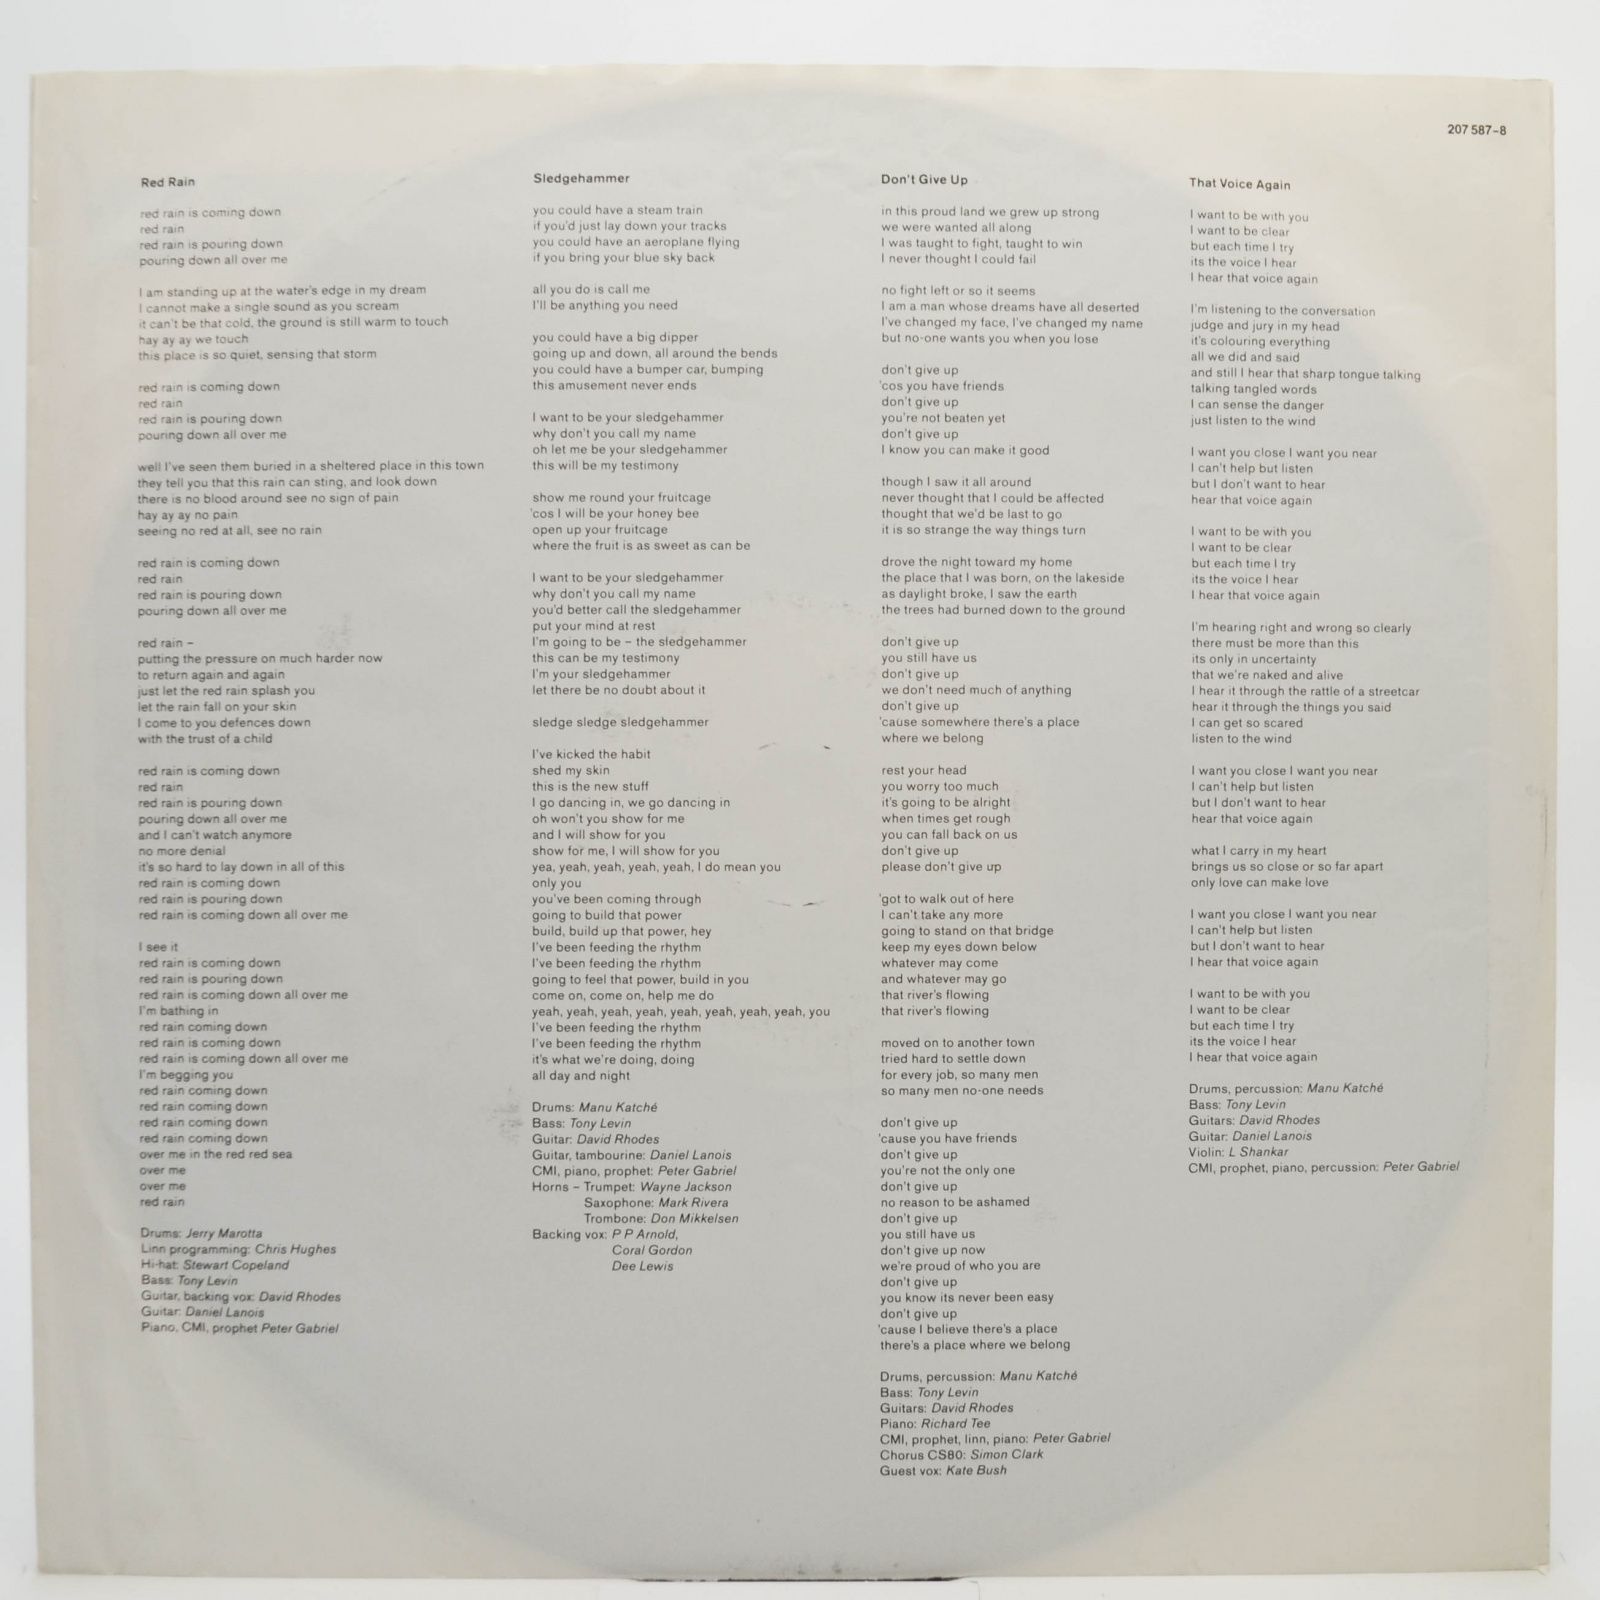 Peter Gabriel — So, 1986